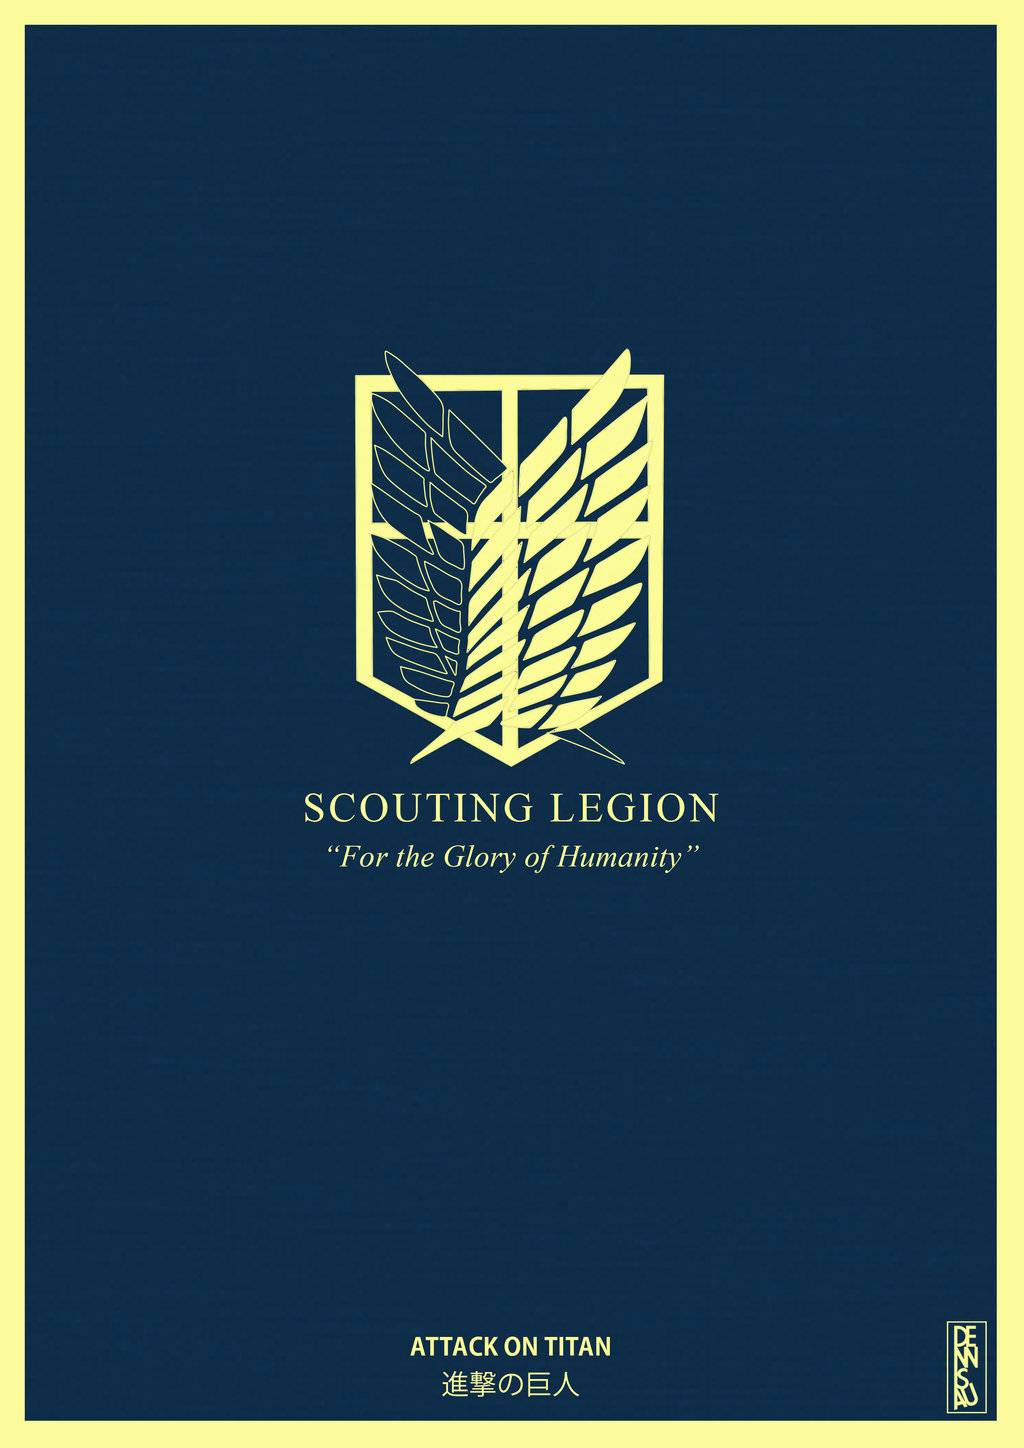 Scouting Legion Wallpaper